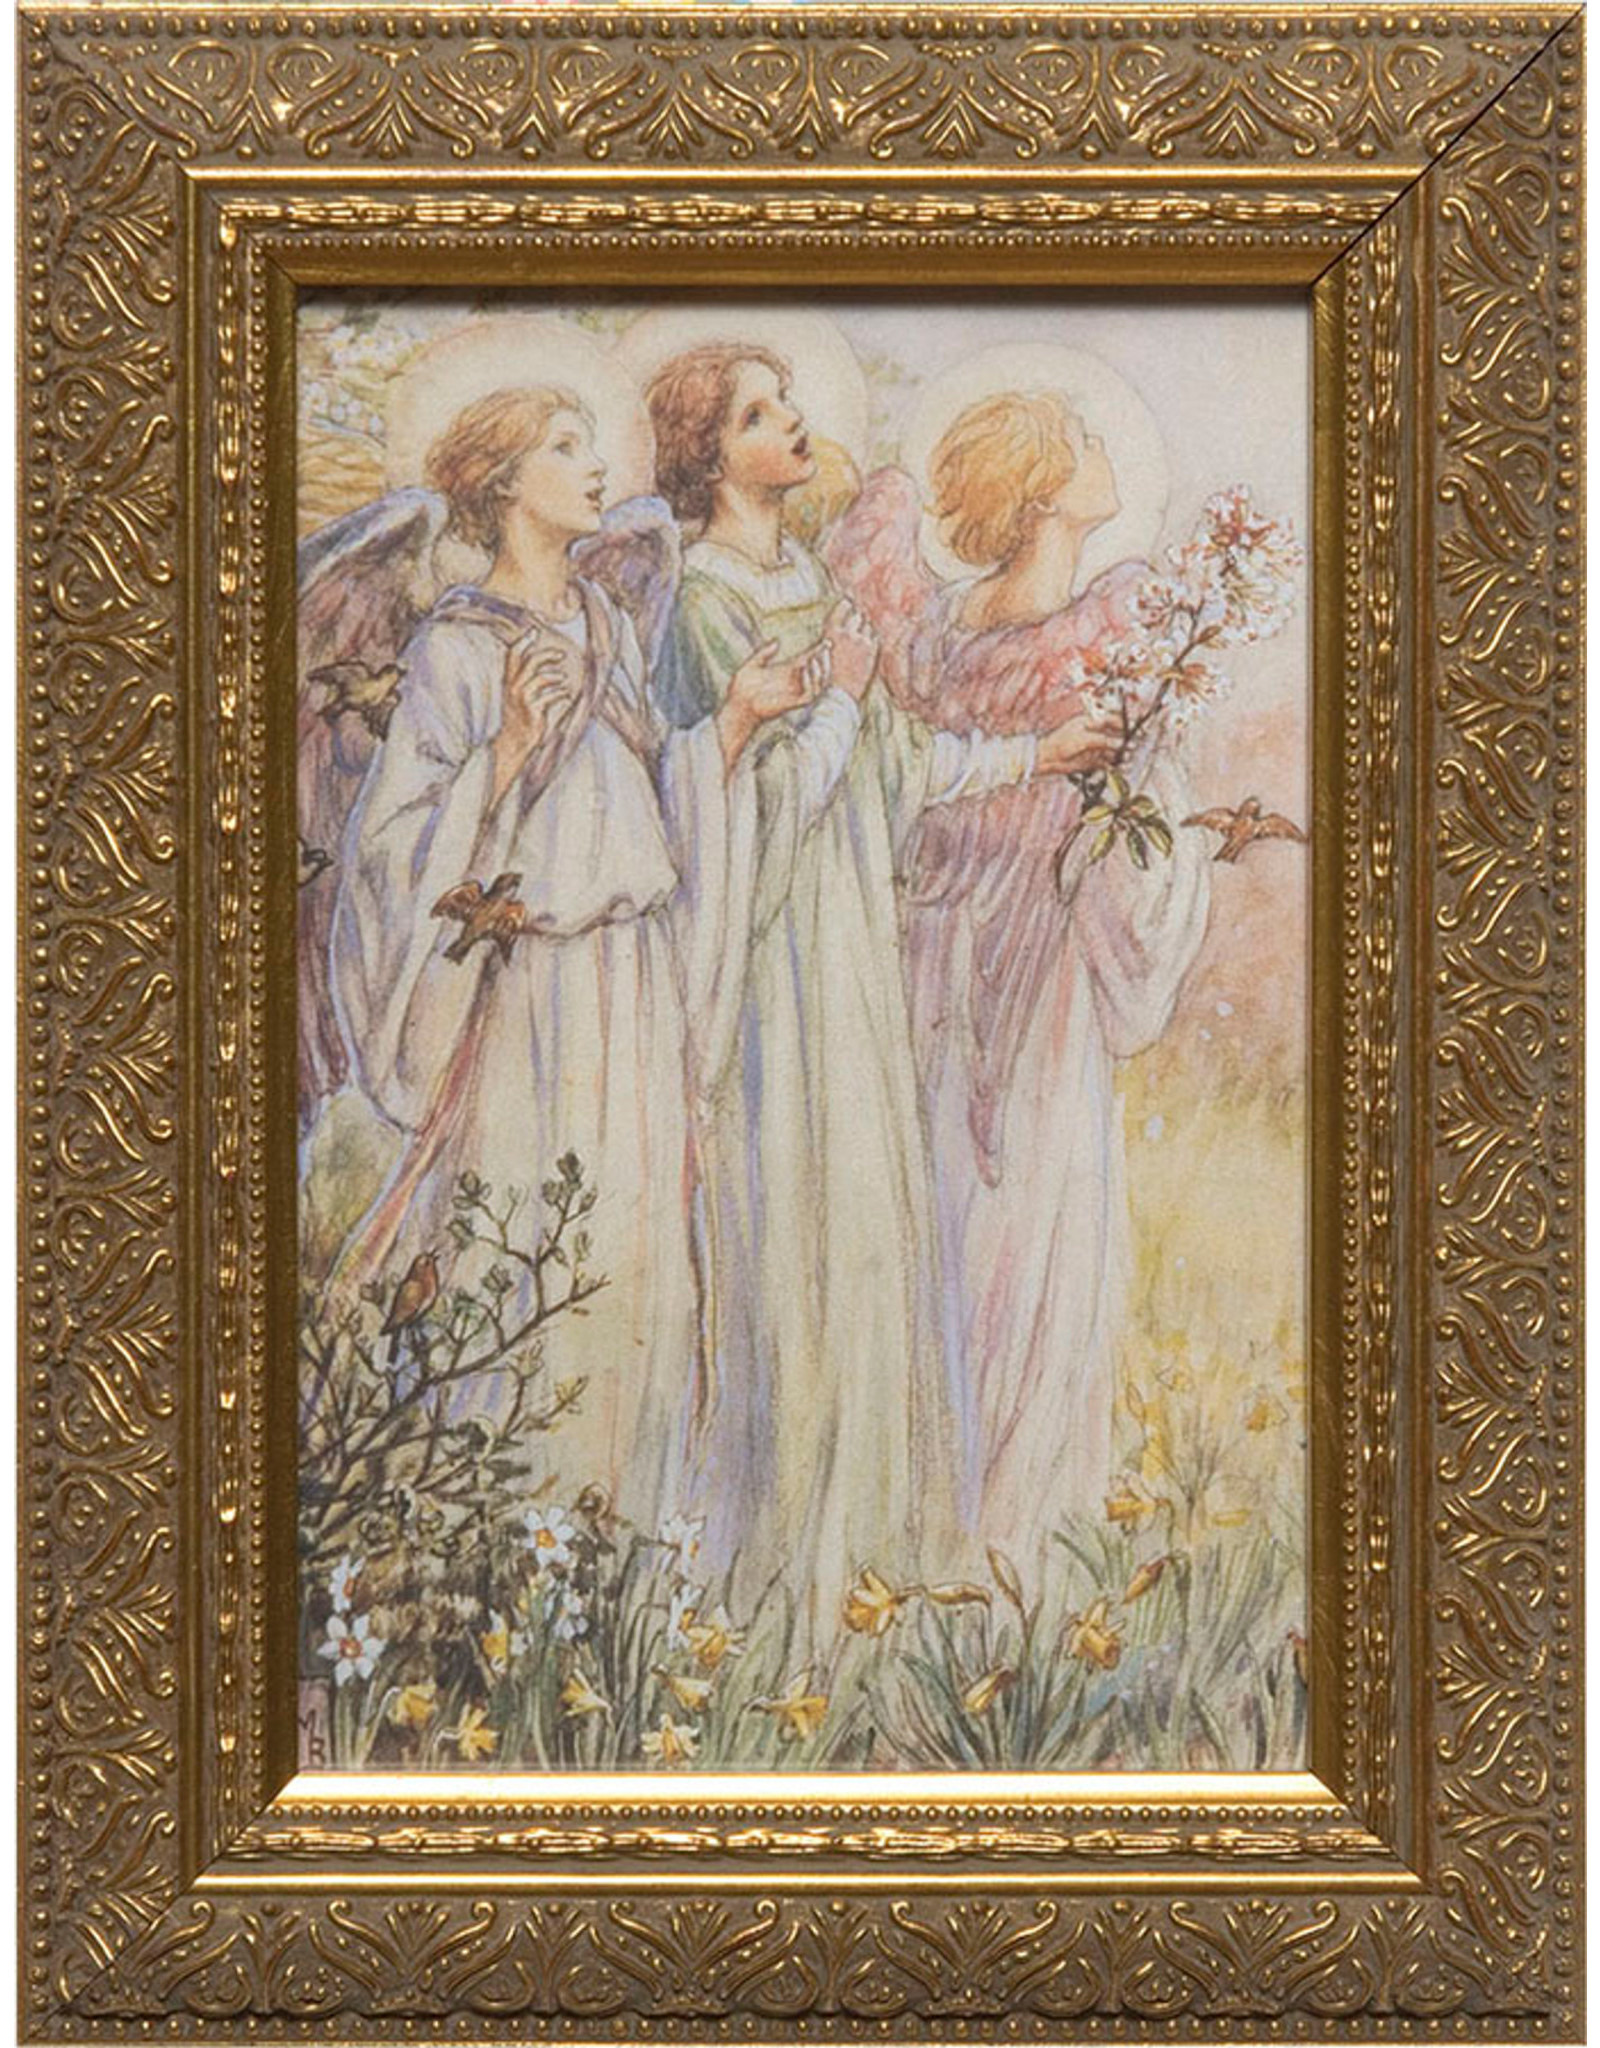 Nelson Art Three Angels by M.C. Barker - Framed Art, 8-1/2 x 5-1/2